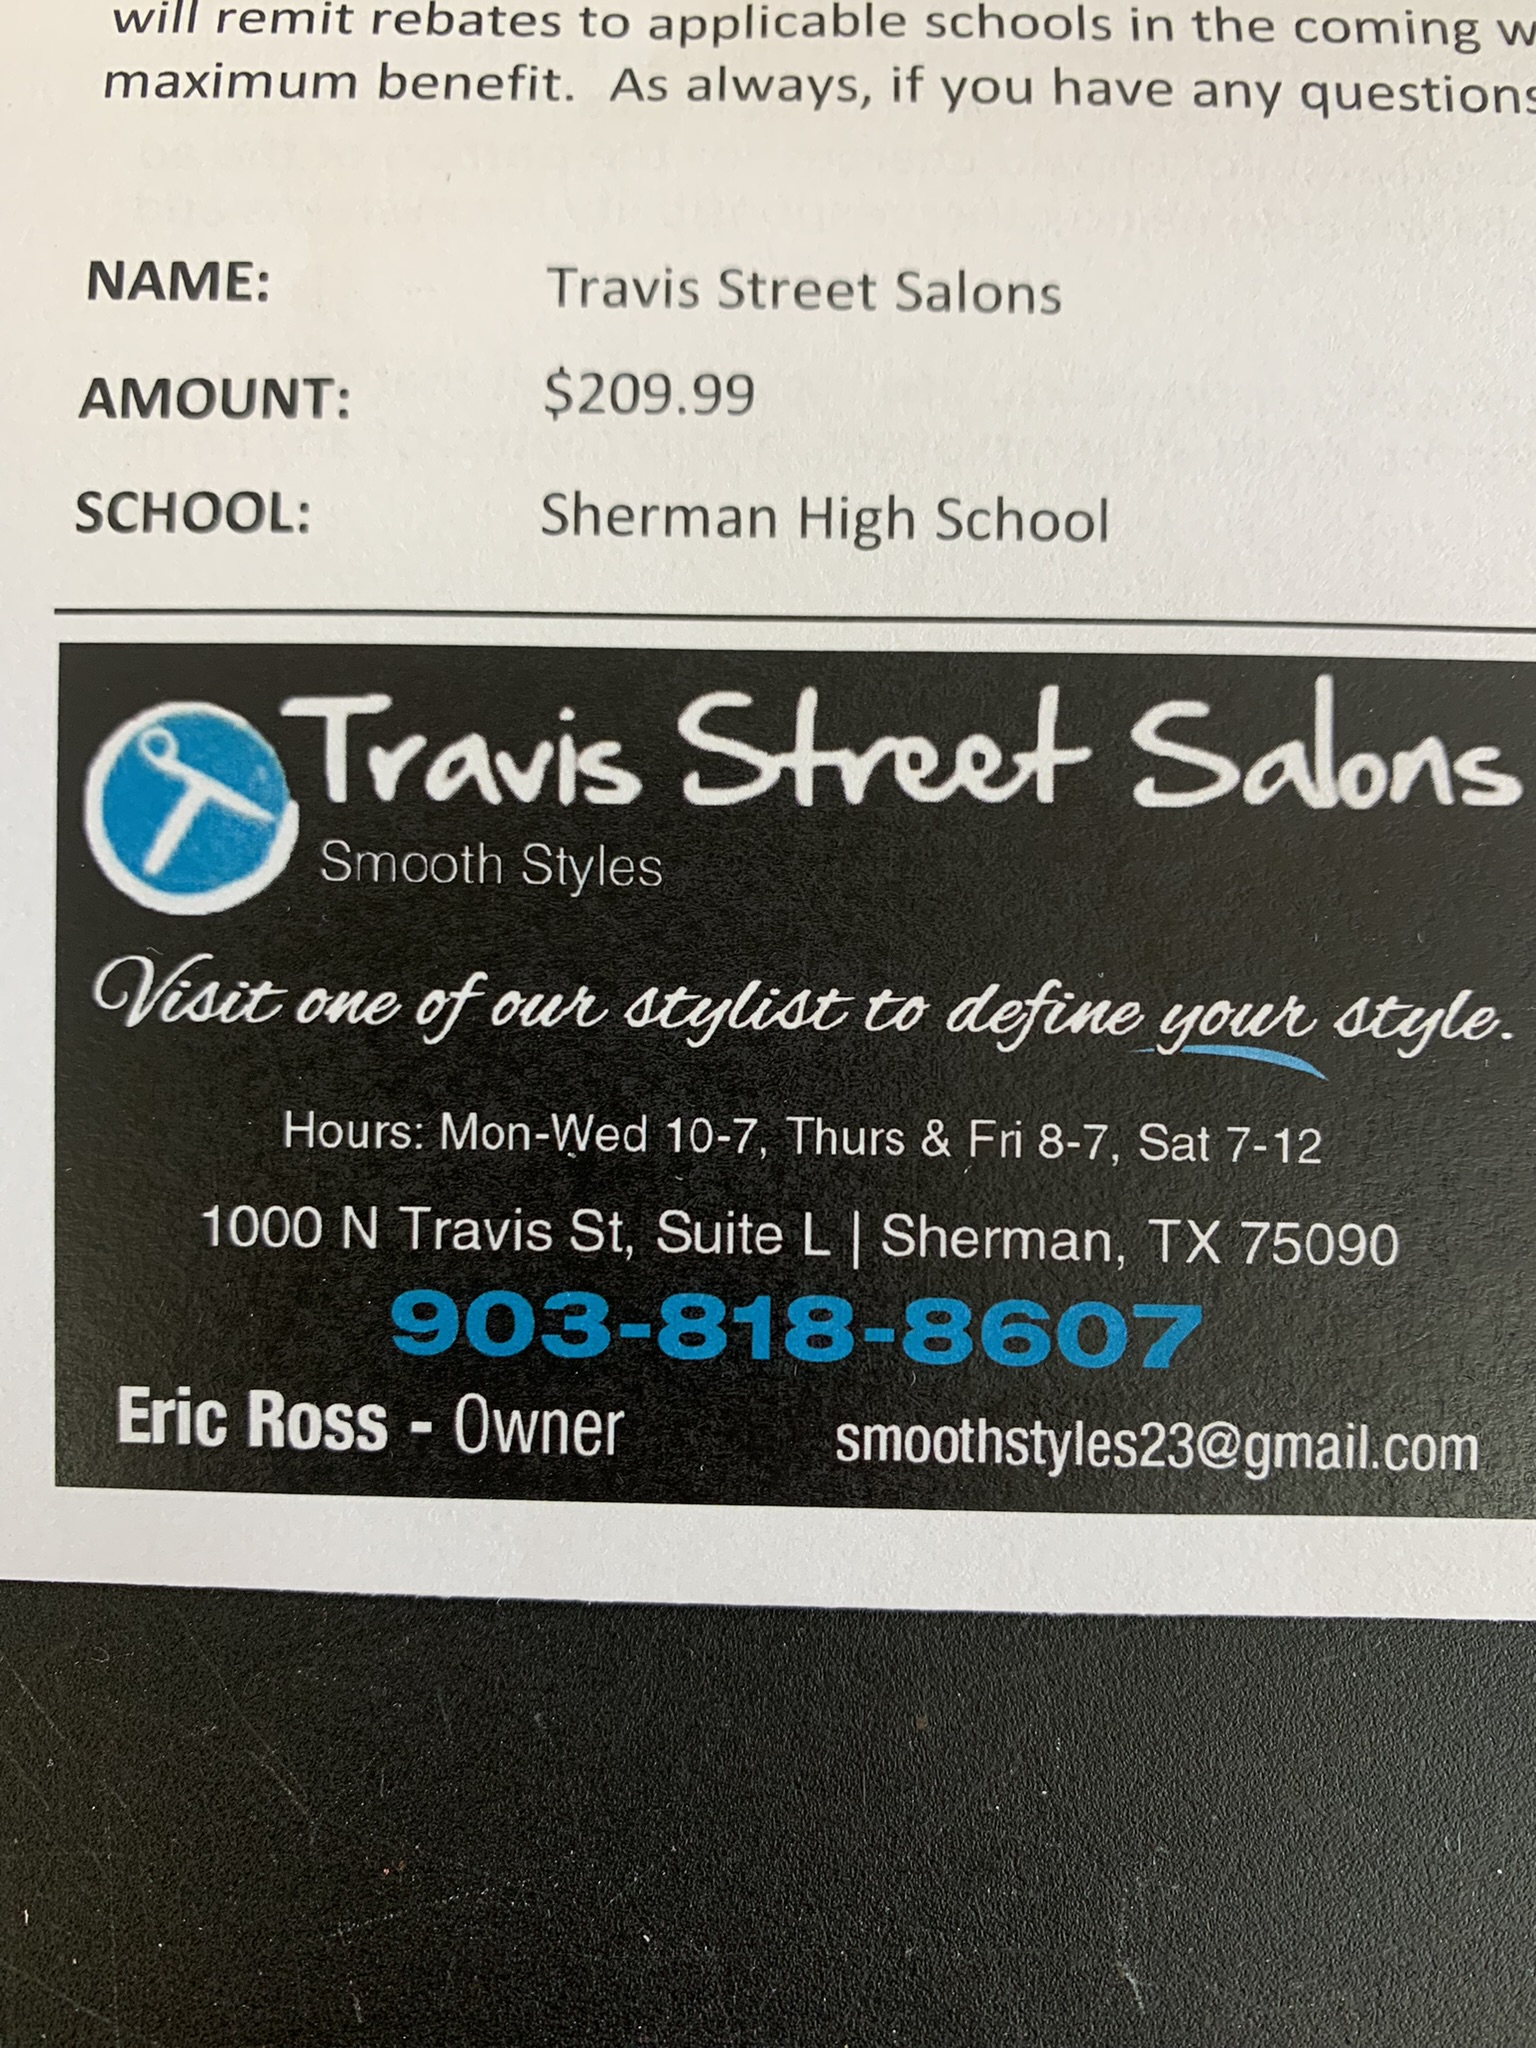 Travis street salons's Image